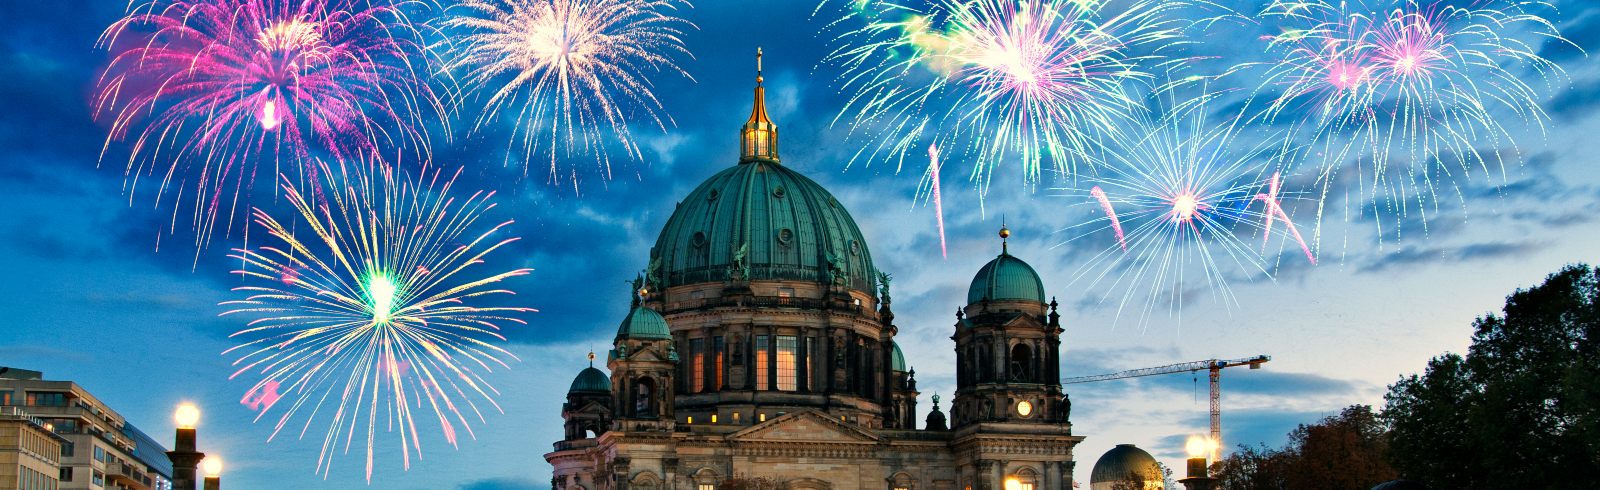 Fireworks in Berlin new year